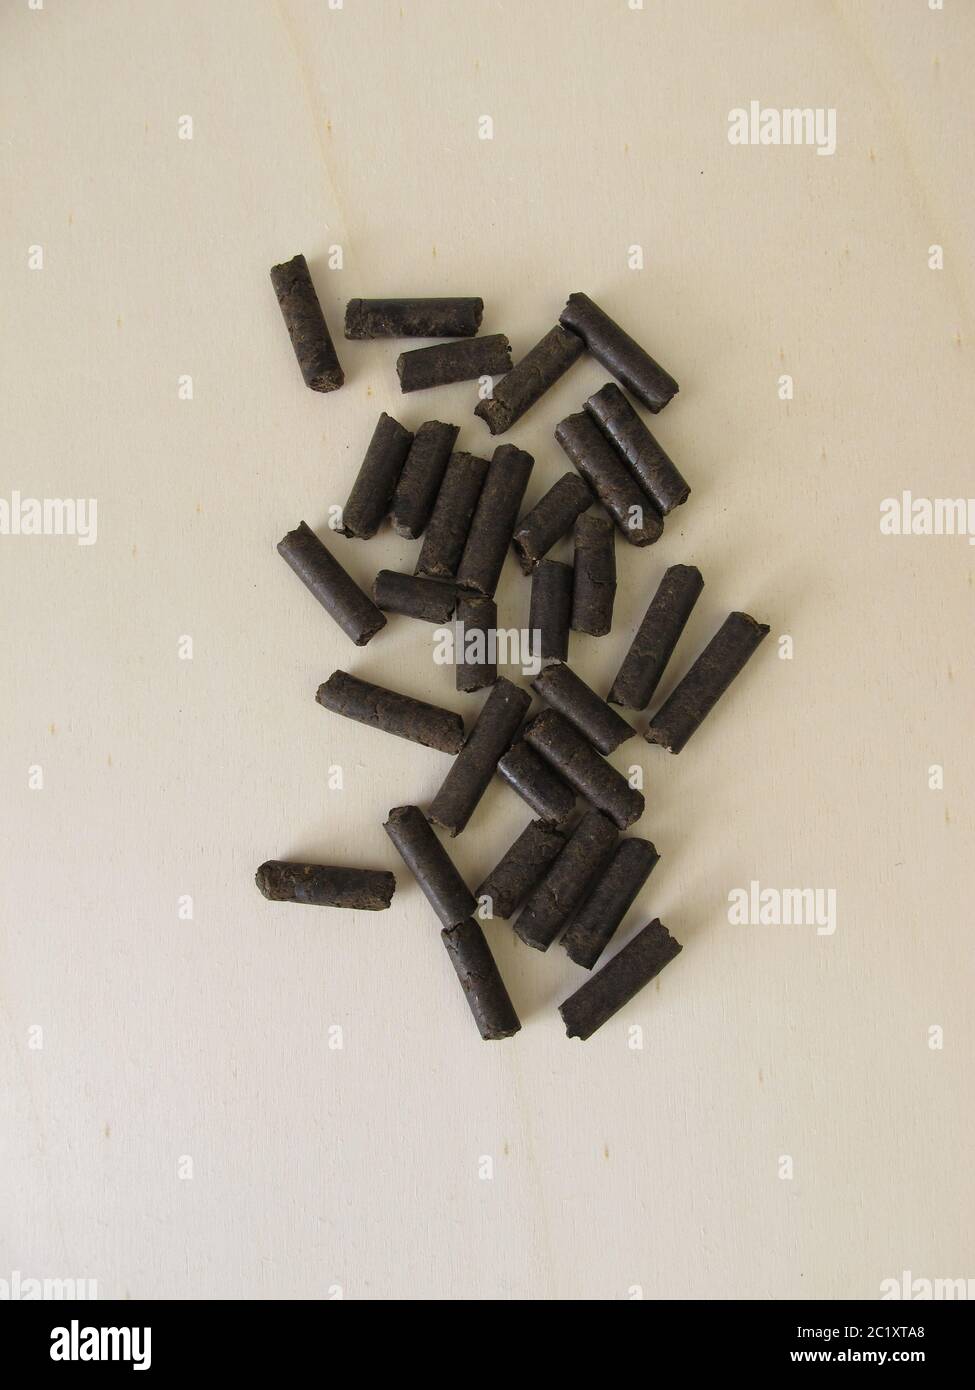 Horse manure pellets for fertilizing on wooden board Stock Photo